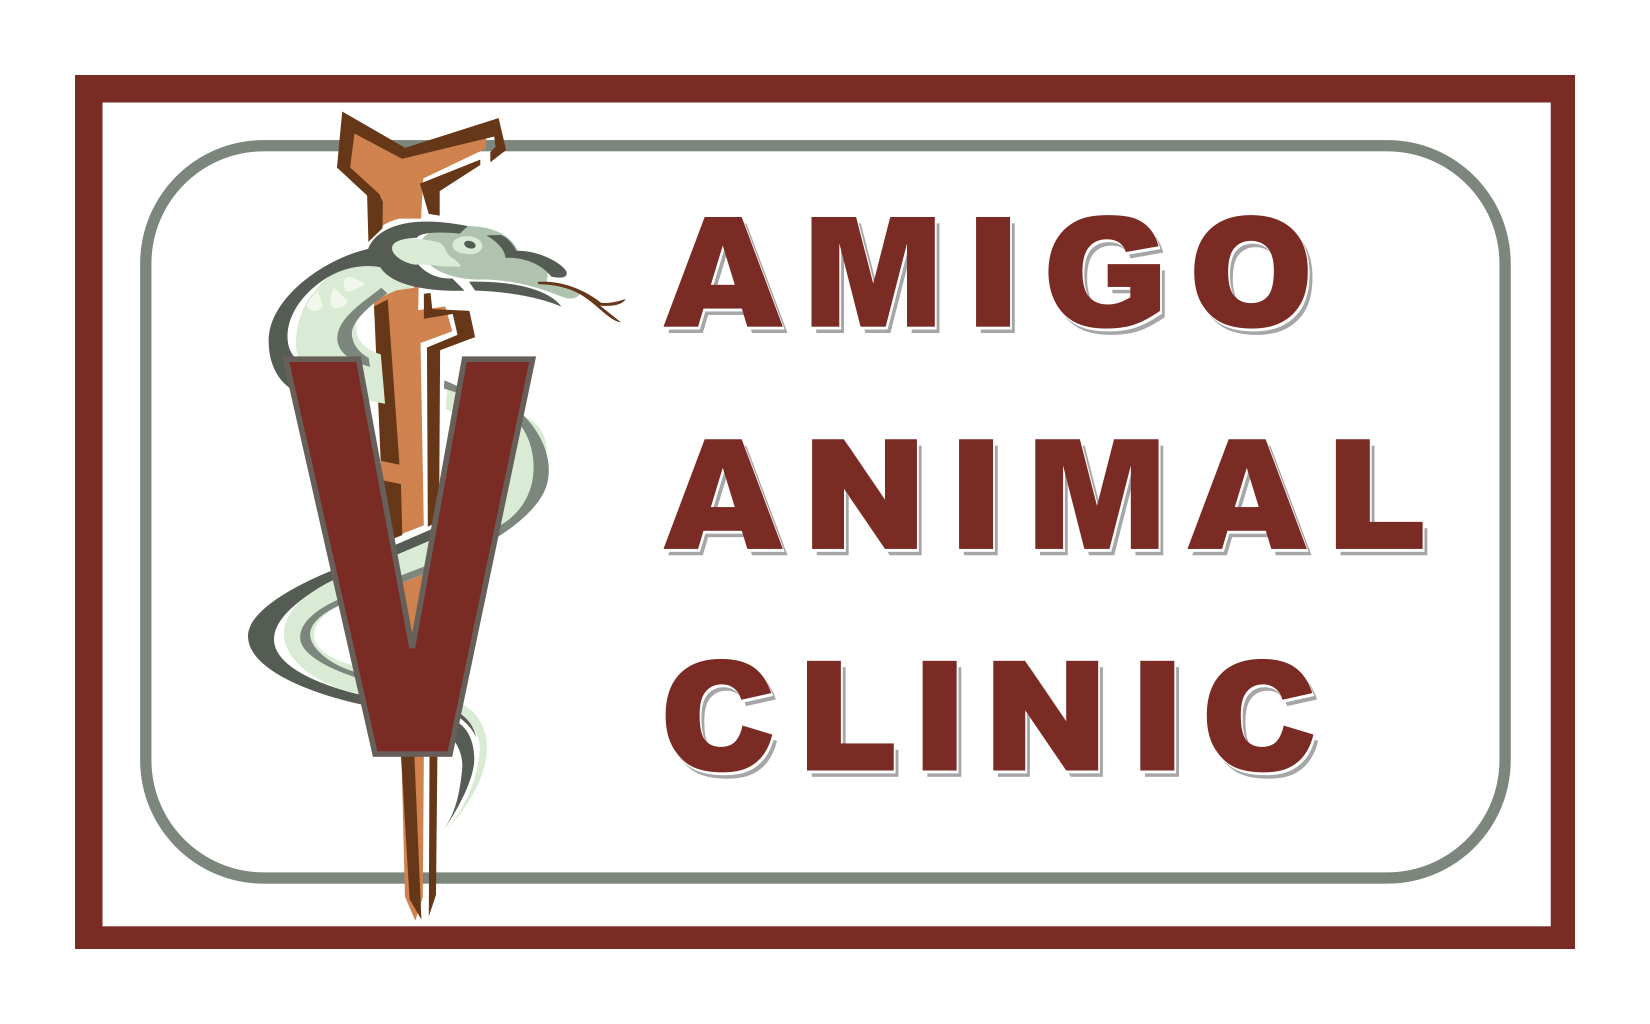 Amigo Animal Clinic